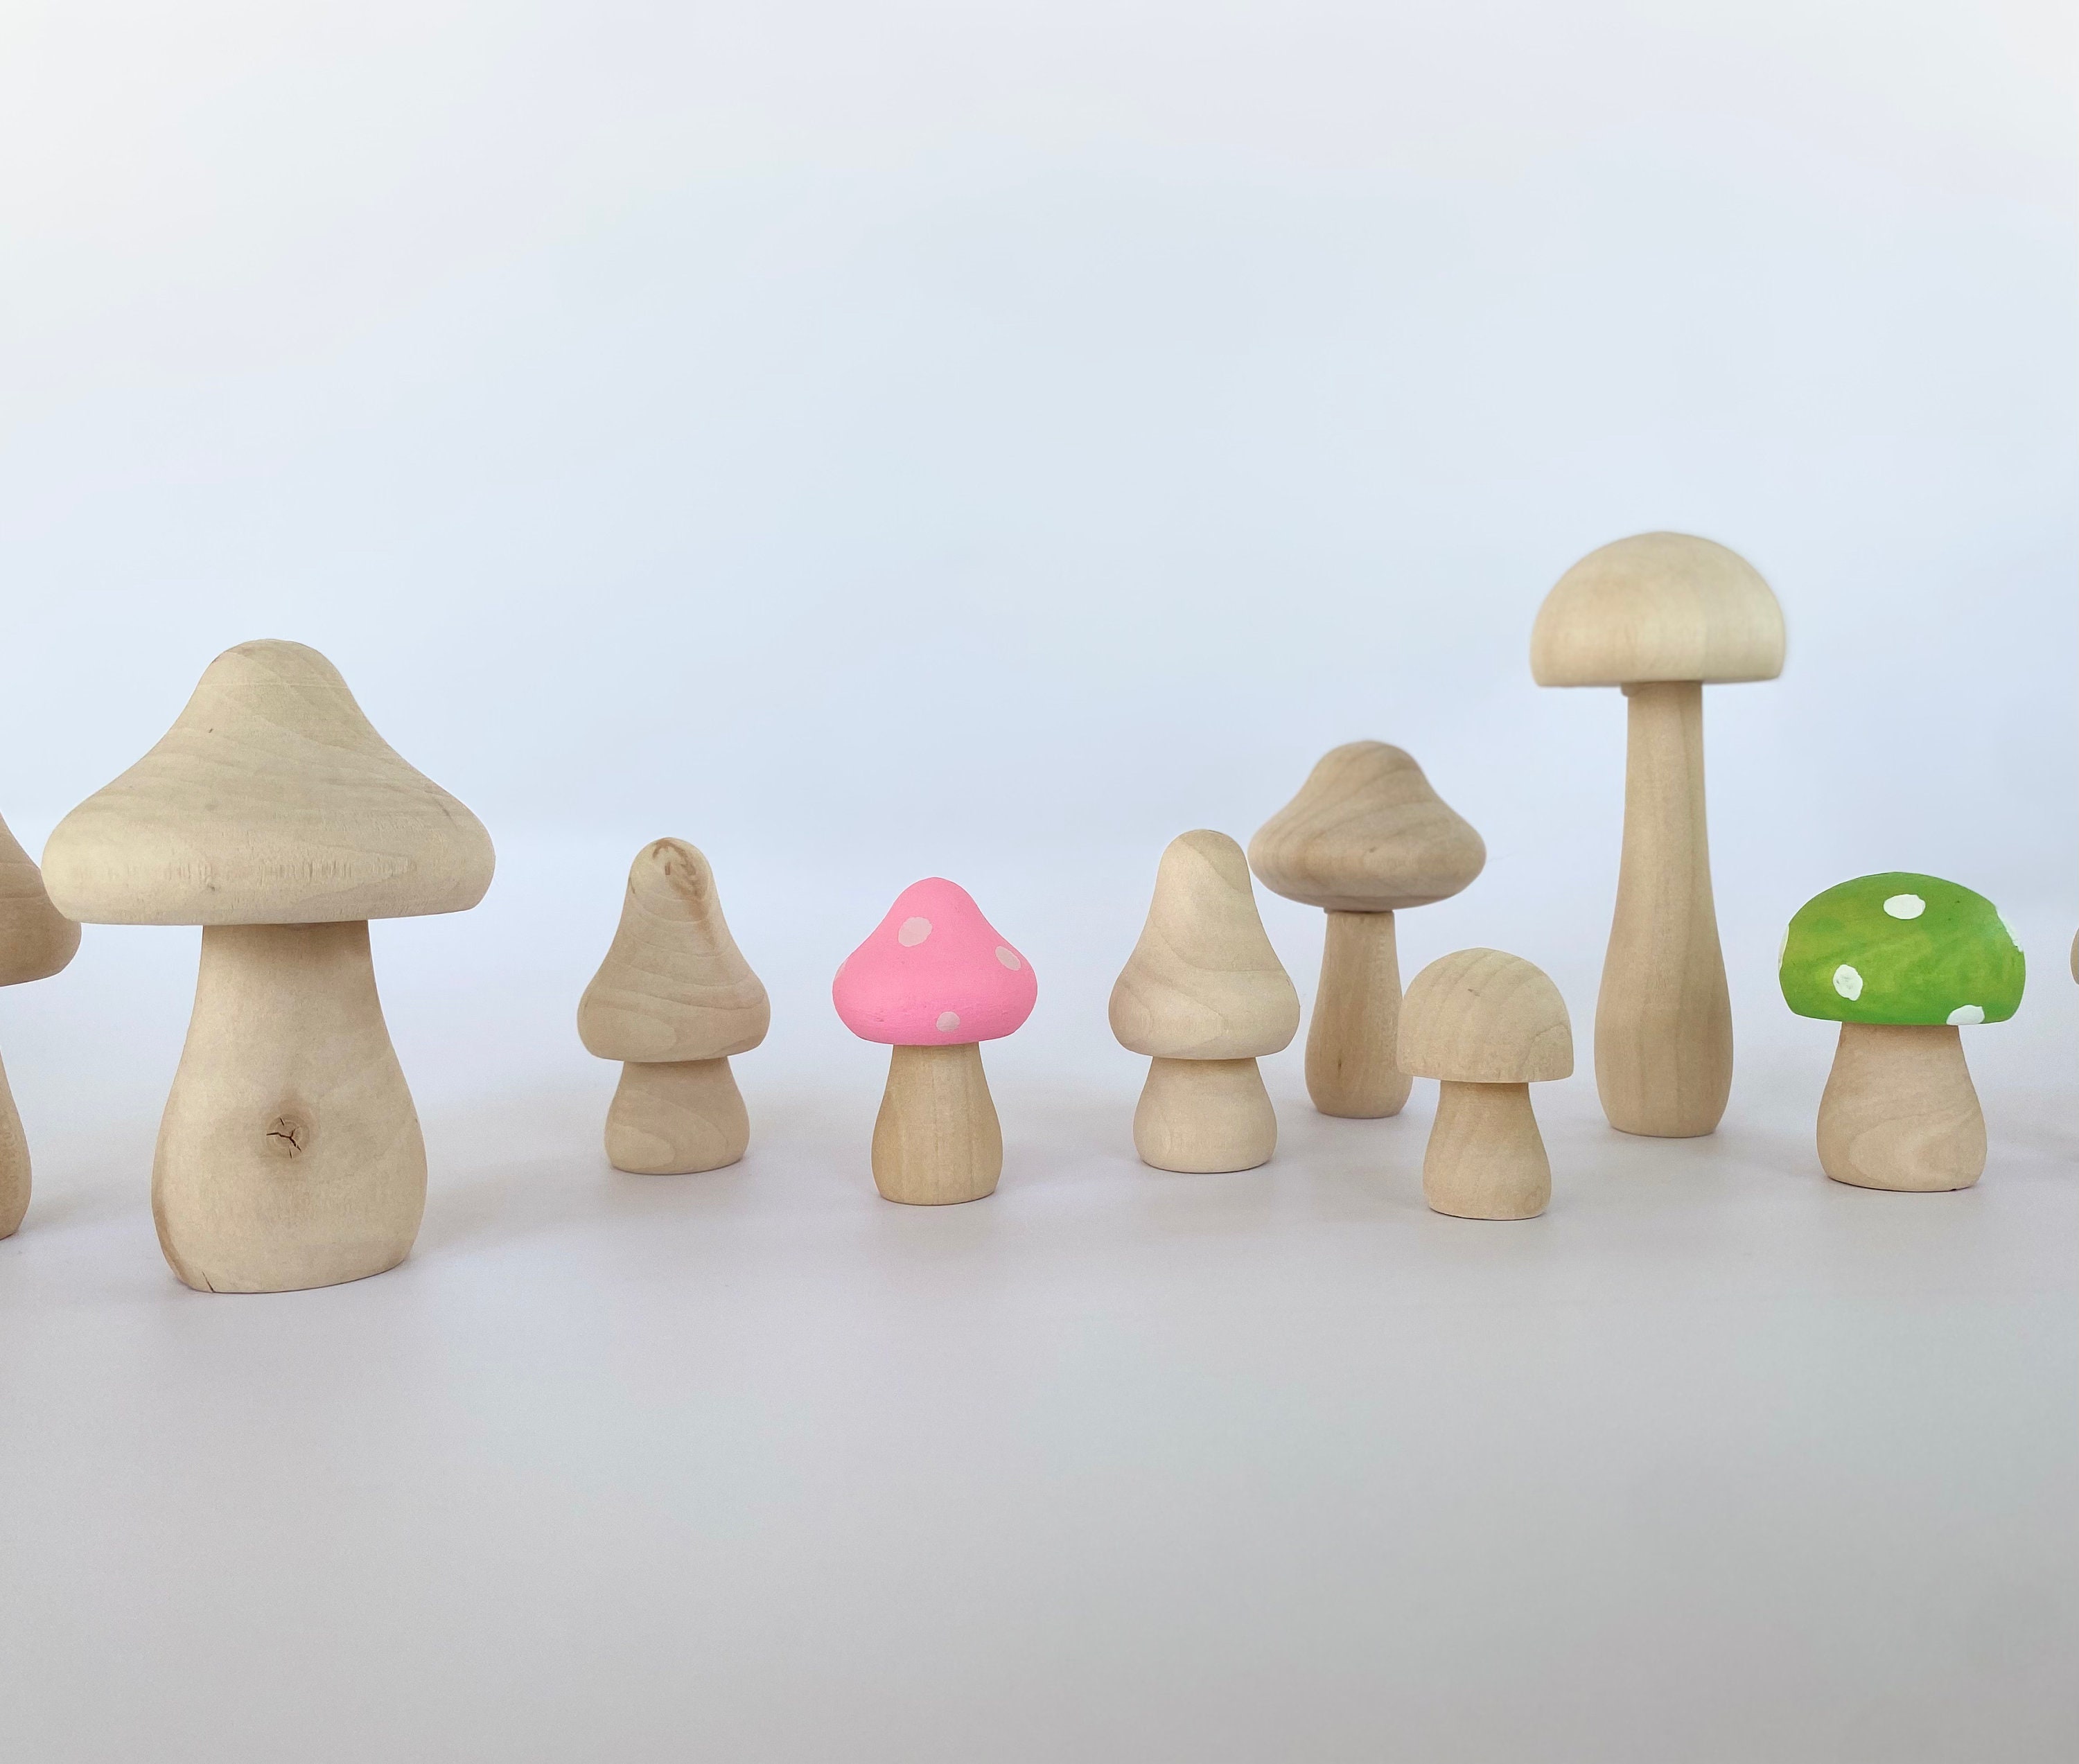 Unfinished Wooden Mushrooms Natural Mini Wooden Mushrooms Various Sizes  Wooden Mushroom Figures Crafts, DIY Project Decorations Paint Colors Home  Desk Bookshelf Decor 